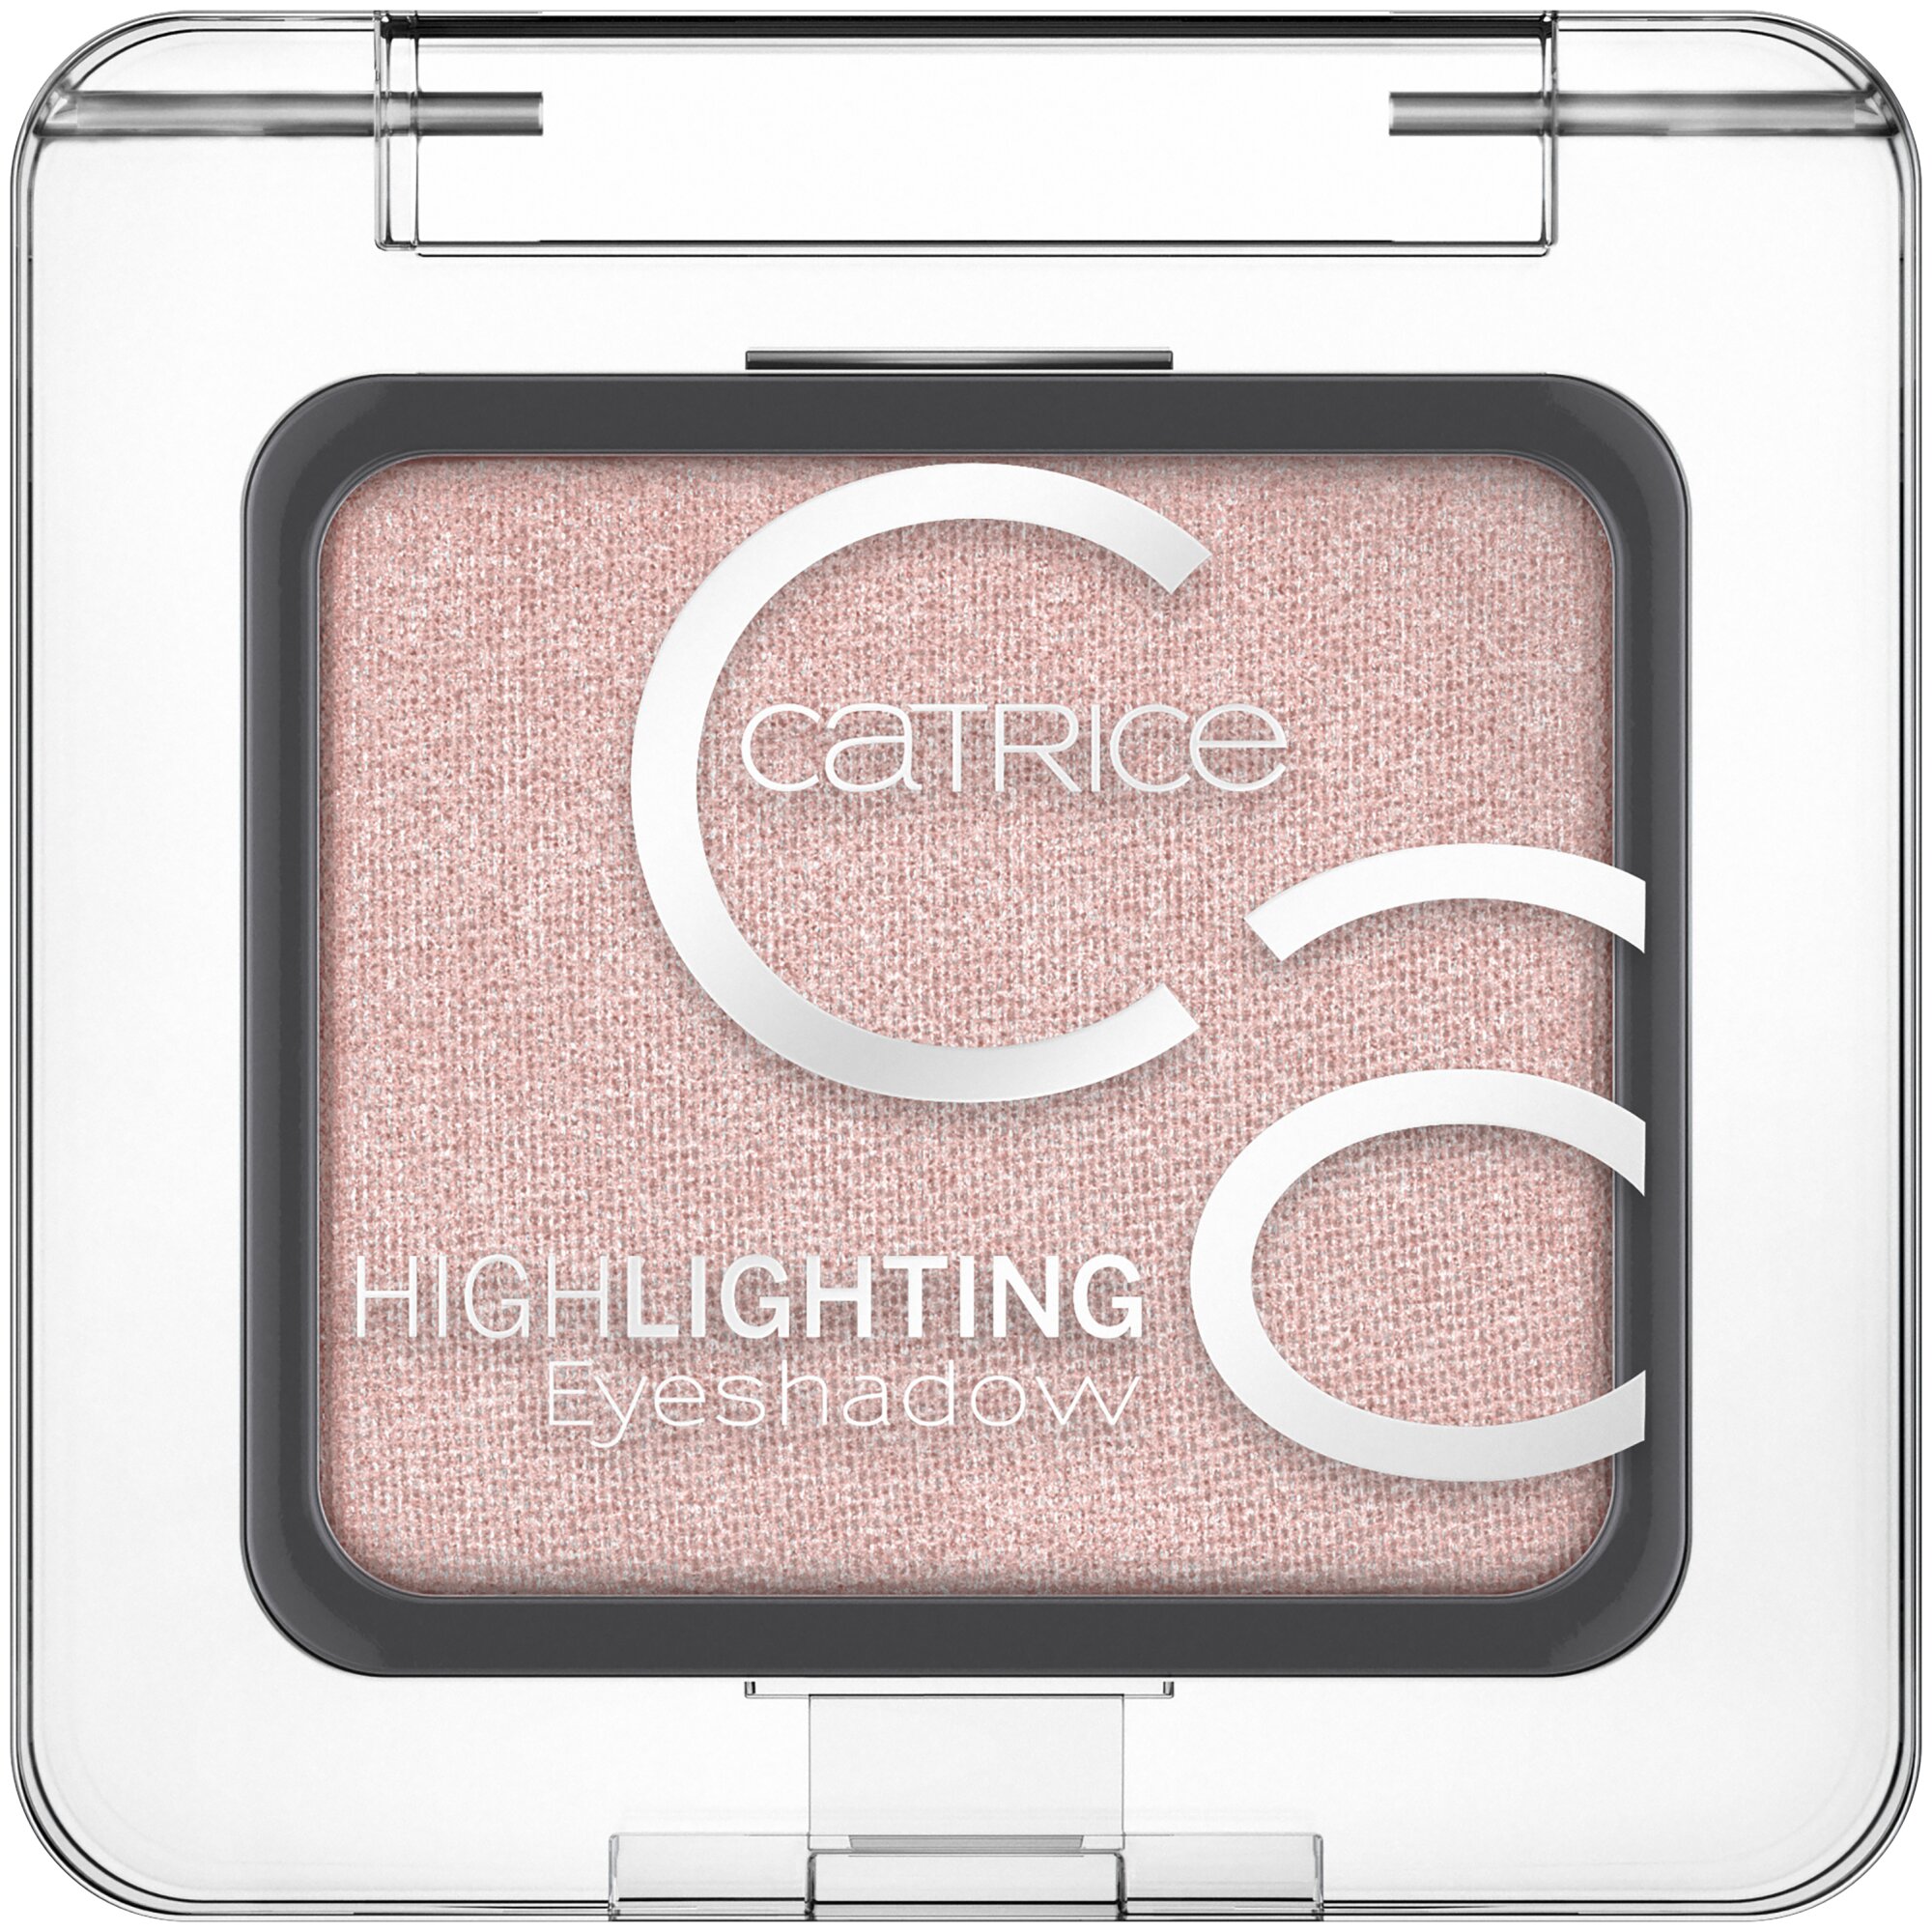 Fard de pleoape Highlighting, 030 - Metallic Lights, 2 g, Catrice